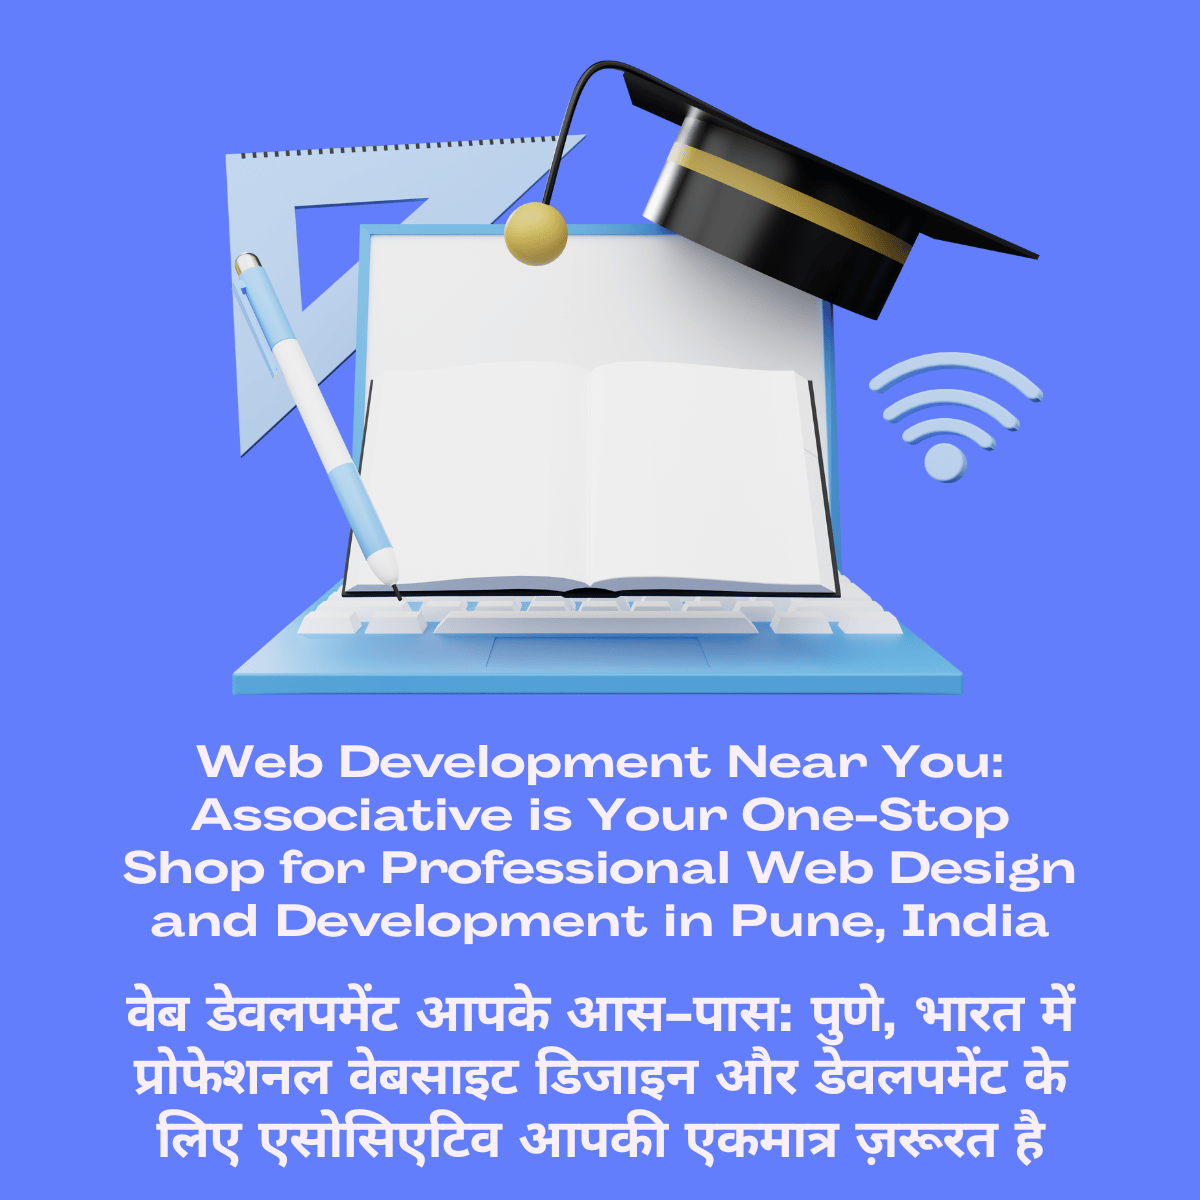 Web Development Near You: Associative is Your One-Stop Shop for Professional Web Design and Development in Pune, India वेब डेवलपमेंट आपके आस-पास: पुणे, भारत में प्रोफेशनल वेबसाइट डिजाइन और डेवलपमेंट के लिए एसोसिएटिव आपकी एकमात्र ज़रूरत है